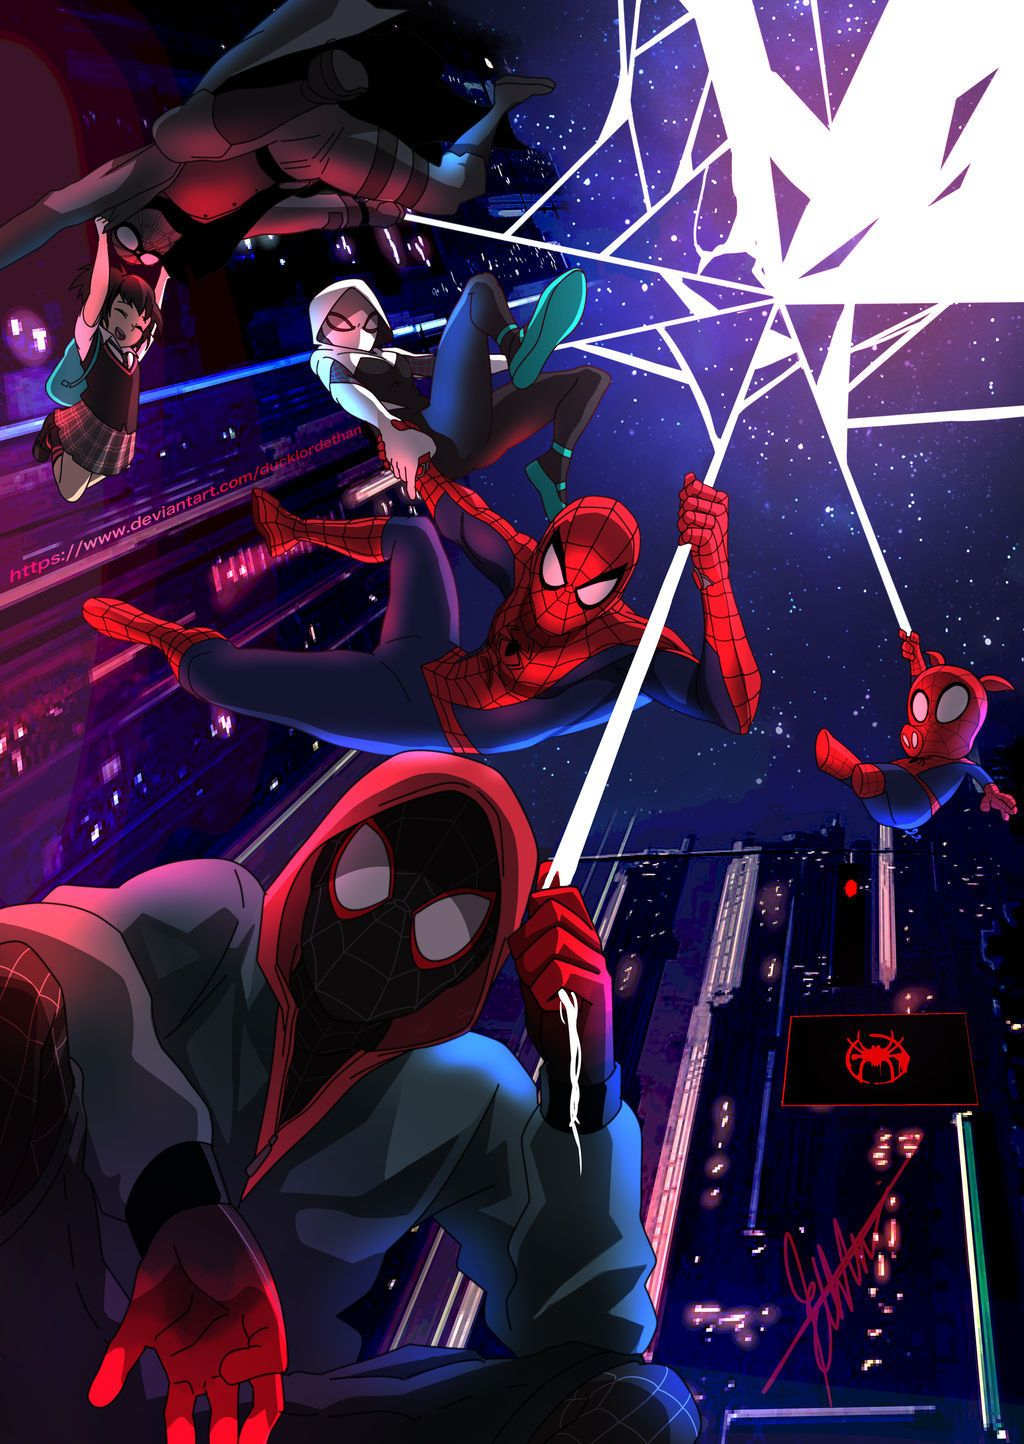 Dessin Manga: Ultimate Spiderman Dessin Anime En Francais avec Spiderman Dessin Animé